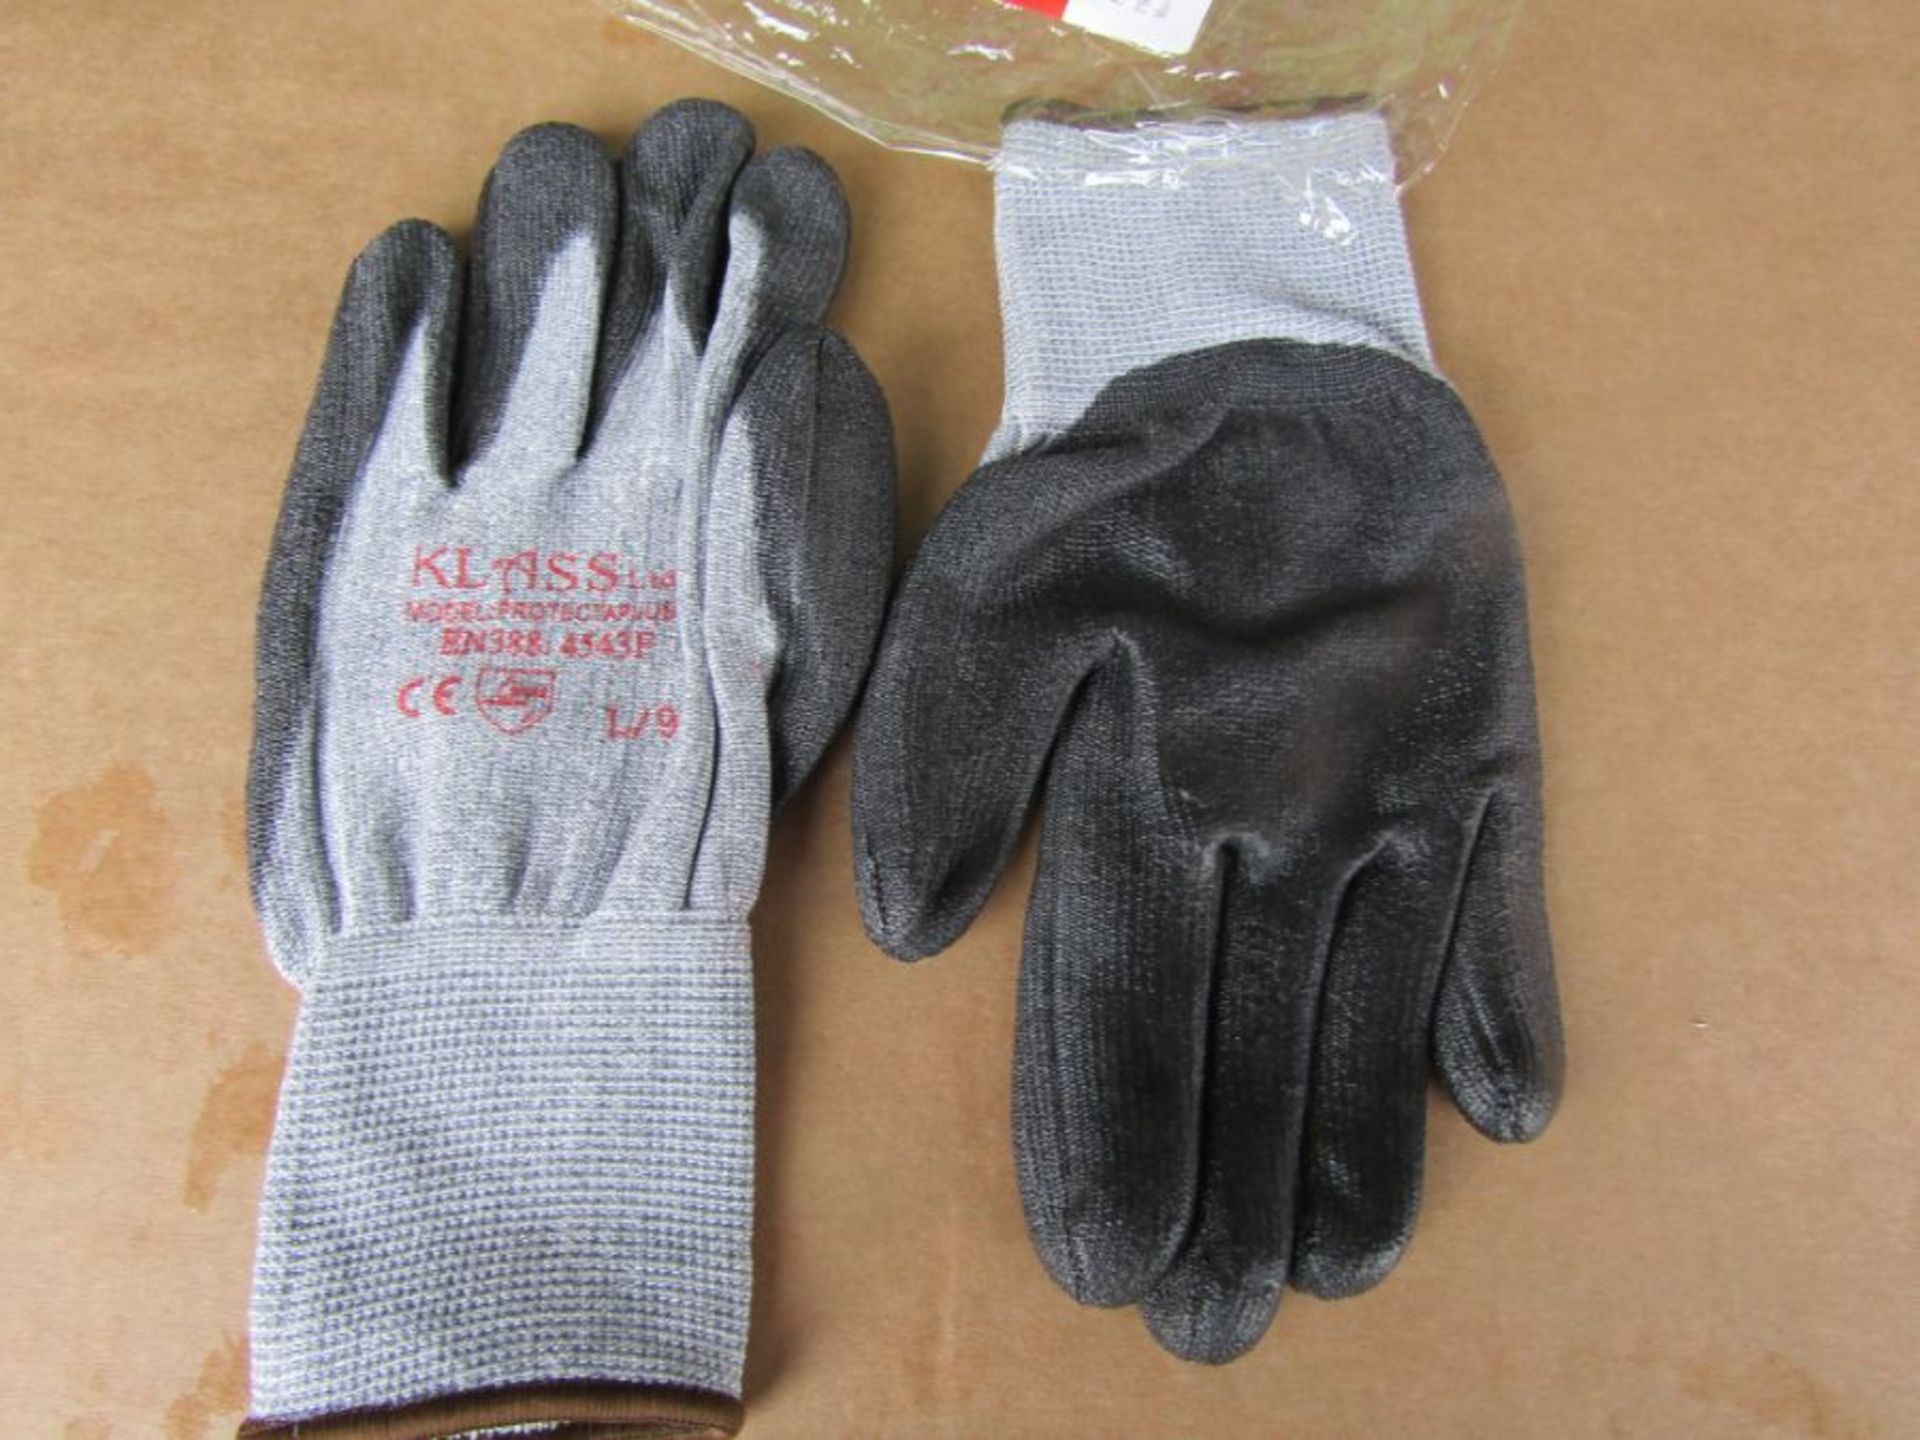 118 x pairs Black Polyurethane Coated Polyethylene Gloves, Size 9 Blkbr 8691635